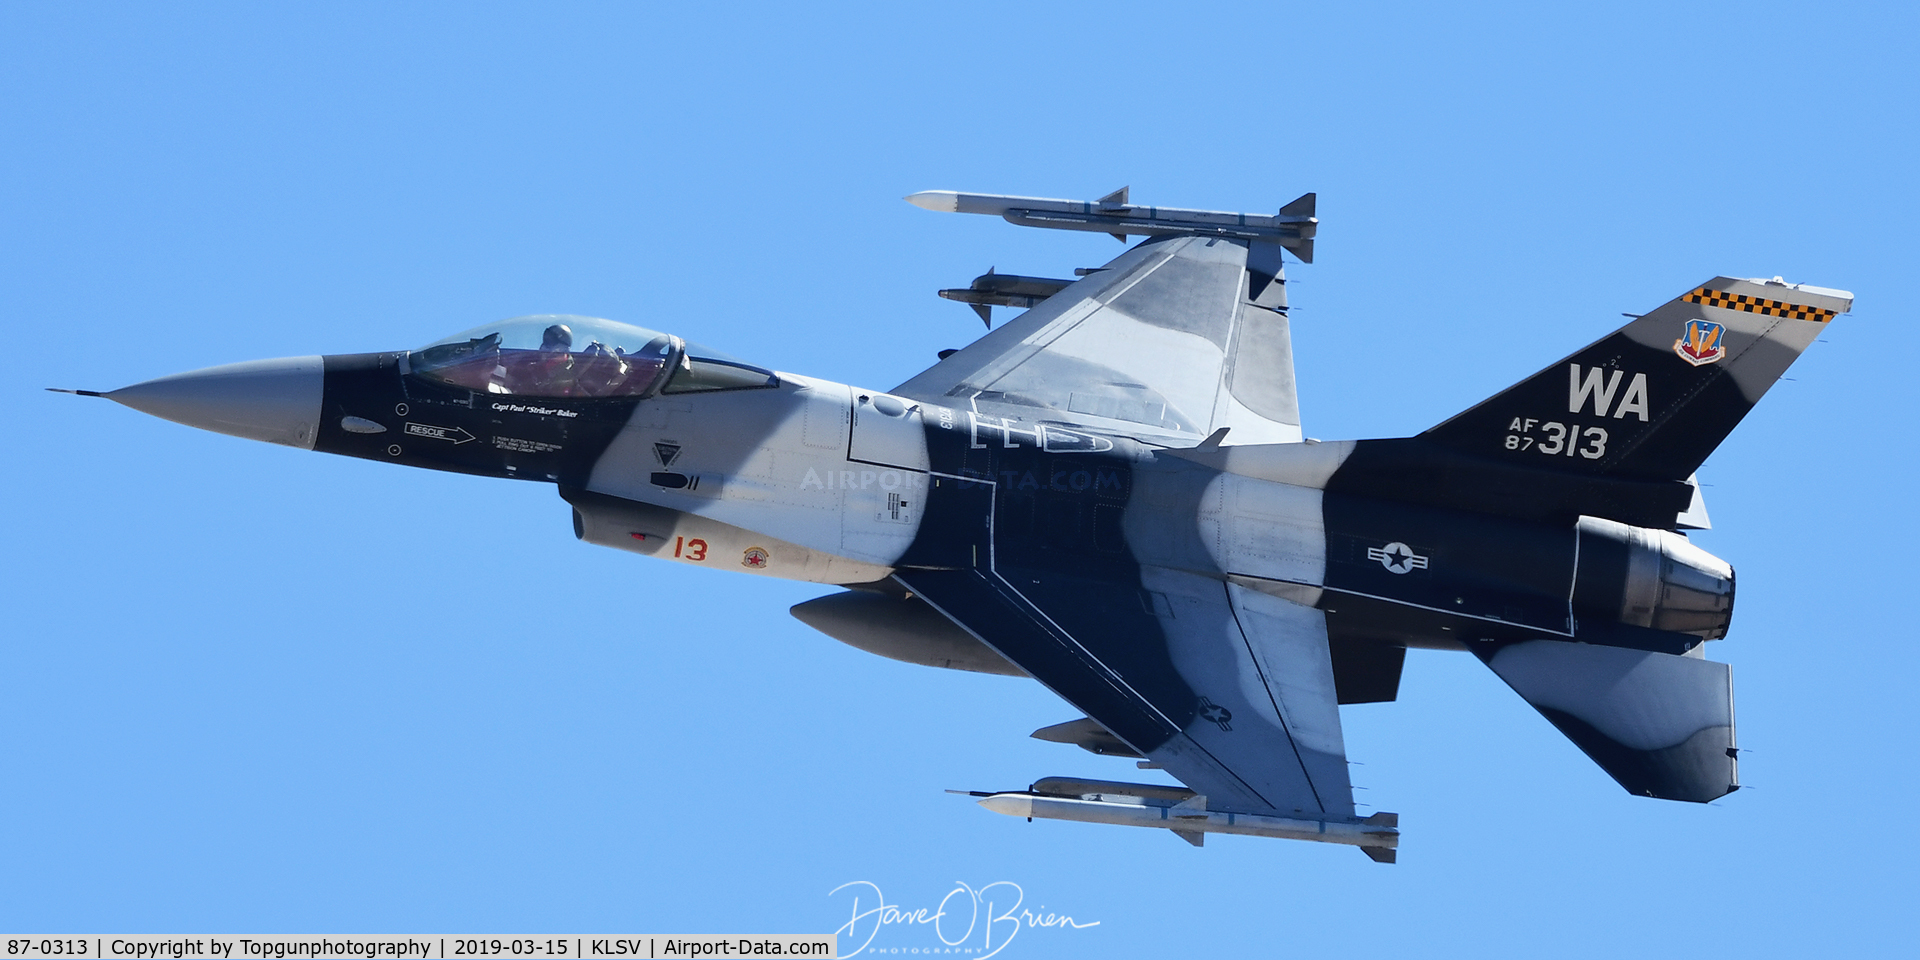 87-0313, 1987 General Dynamics F-16C Fighting Falcon C/N 5C-574, VIPER31 in Arctic Camo